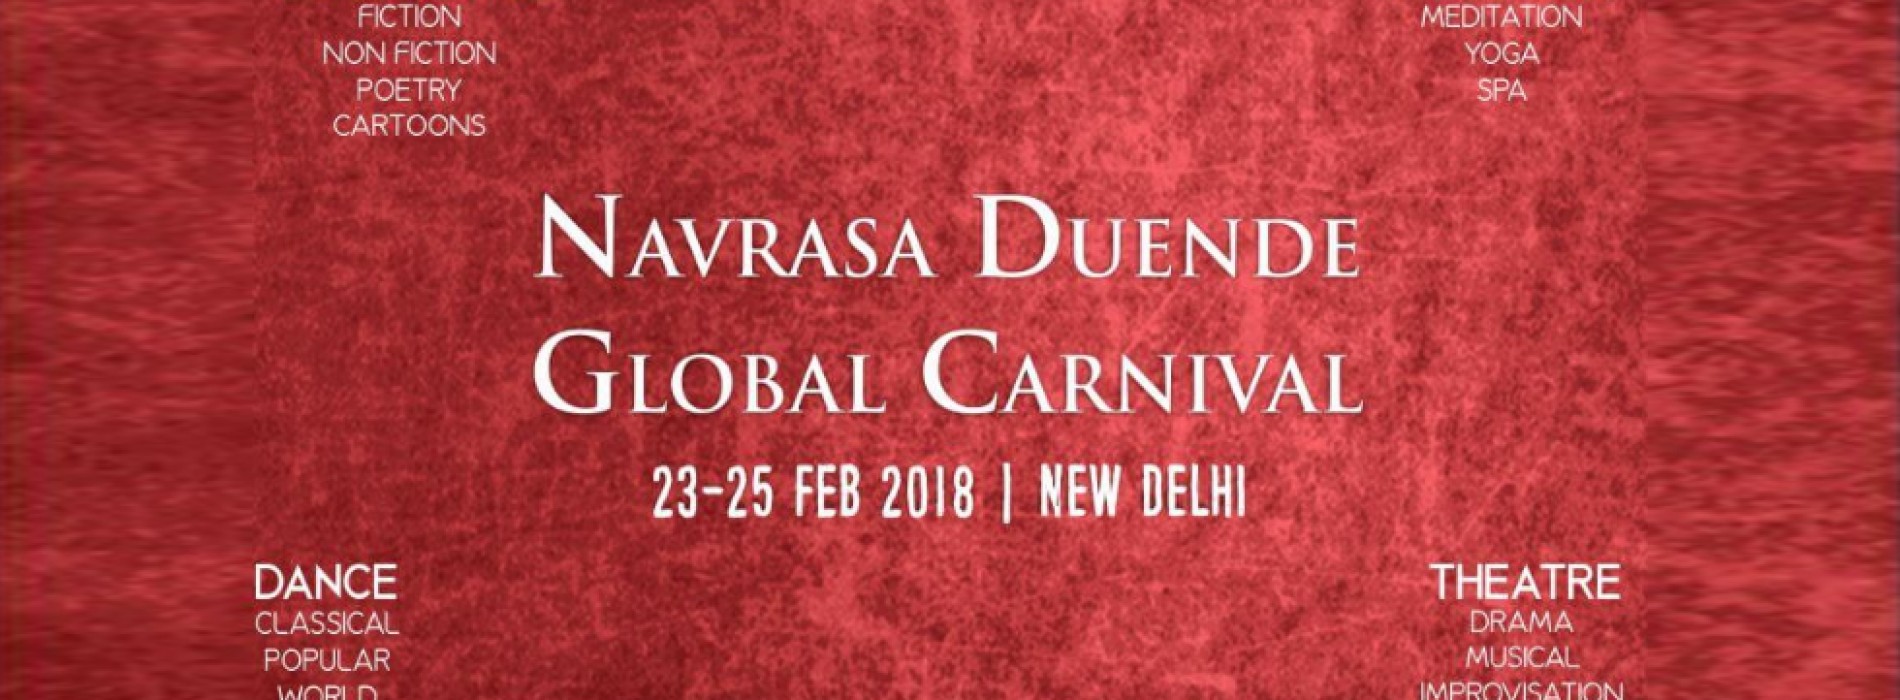 Navrasa Duende Global Carnival 2018